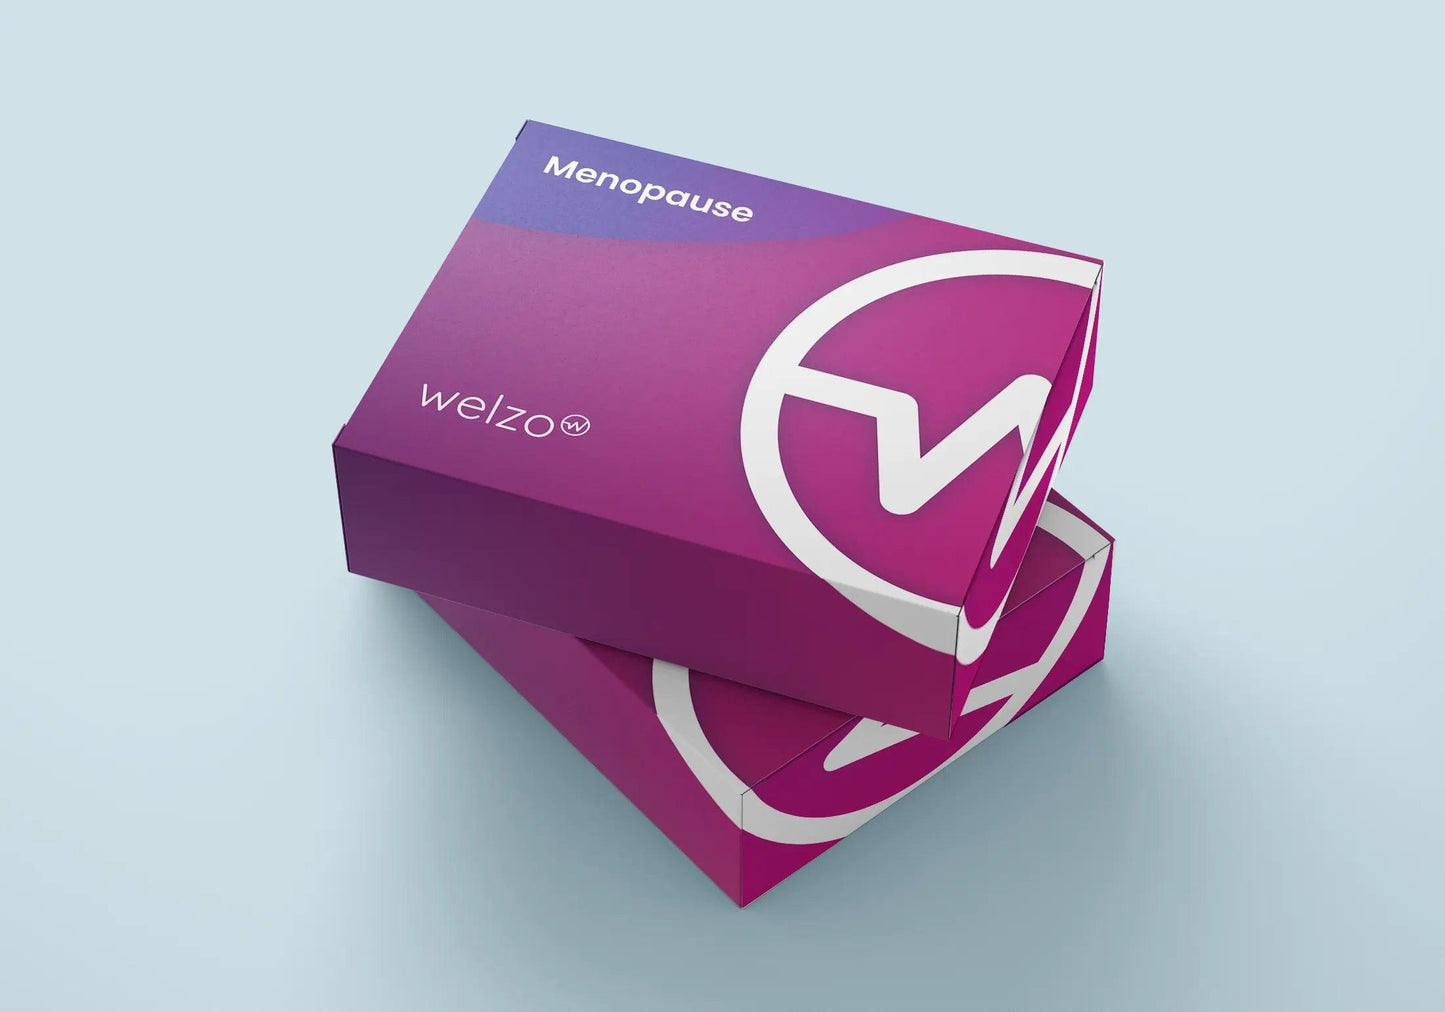 Menopause Blood Test